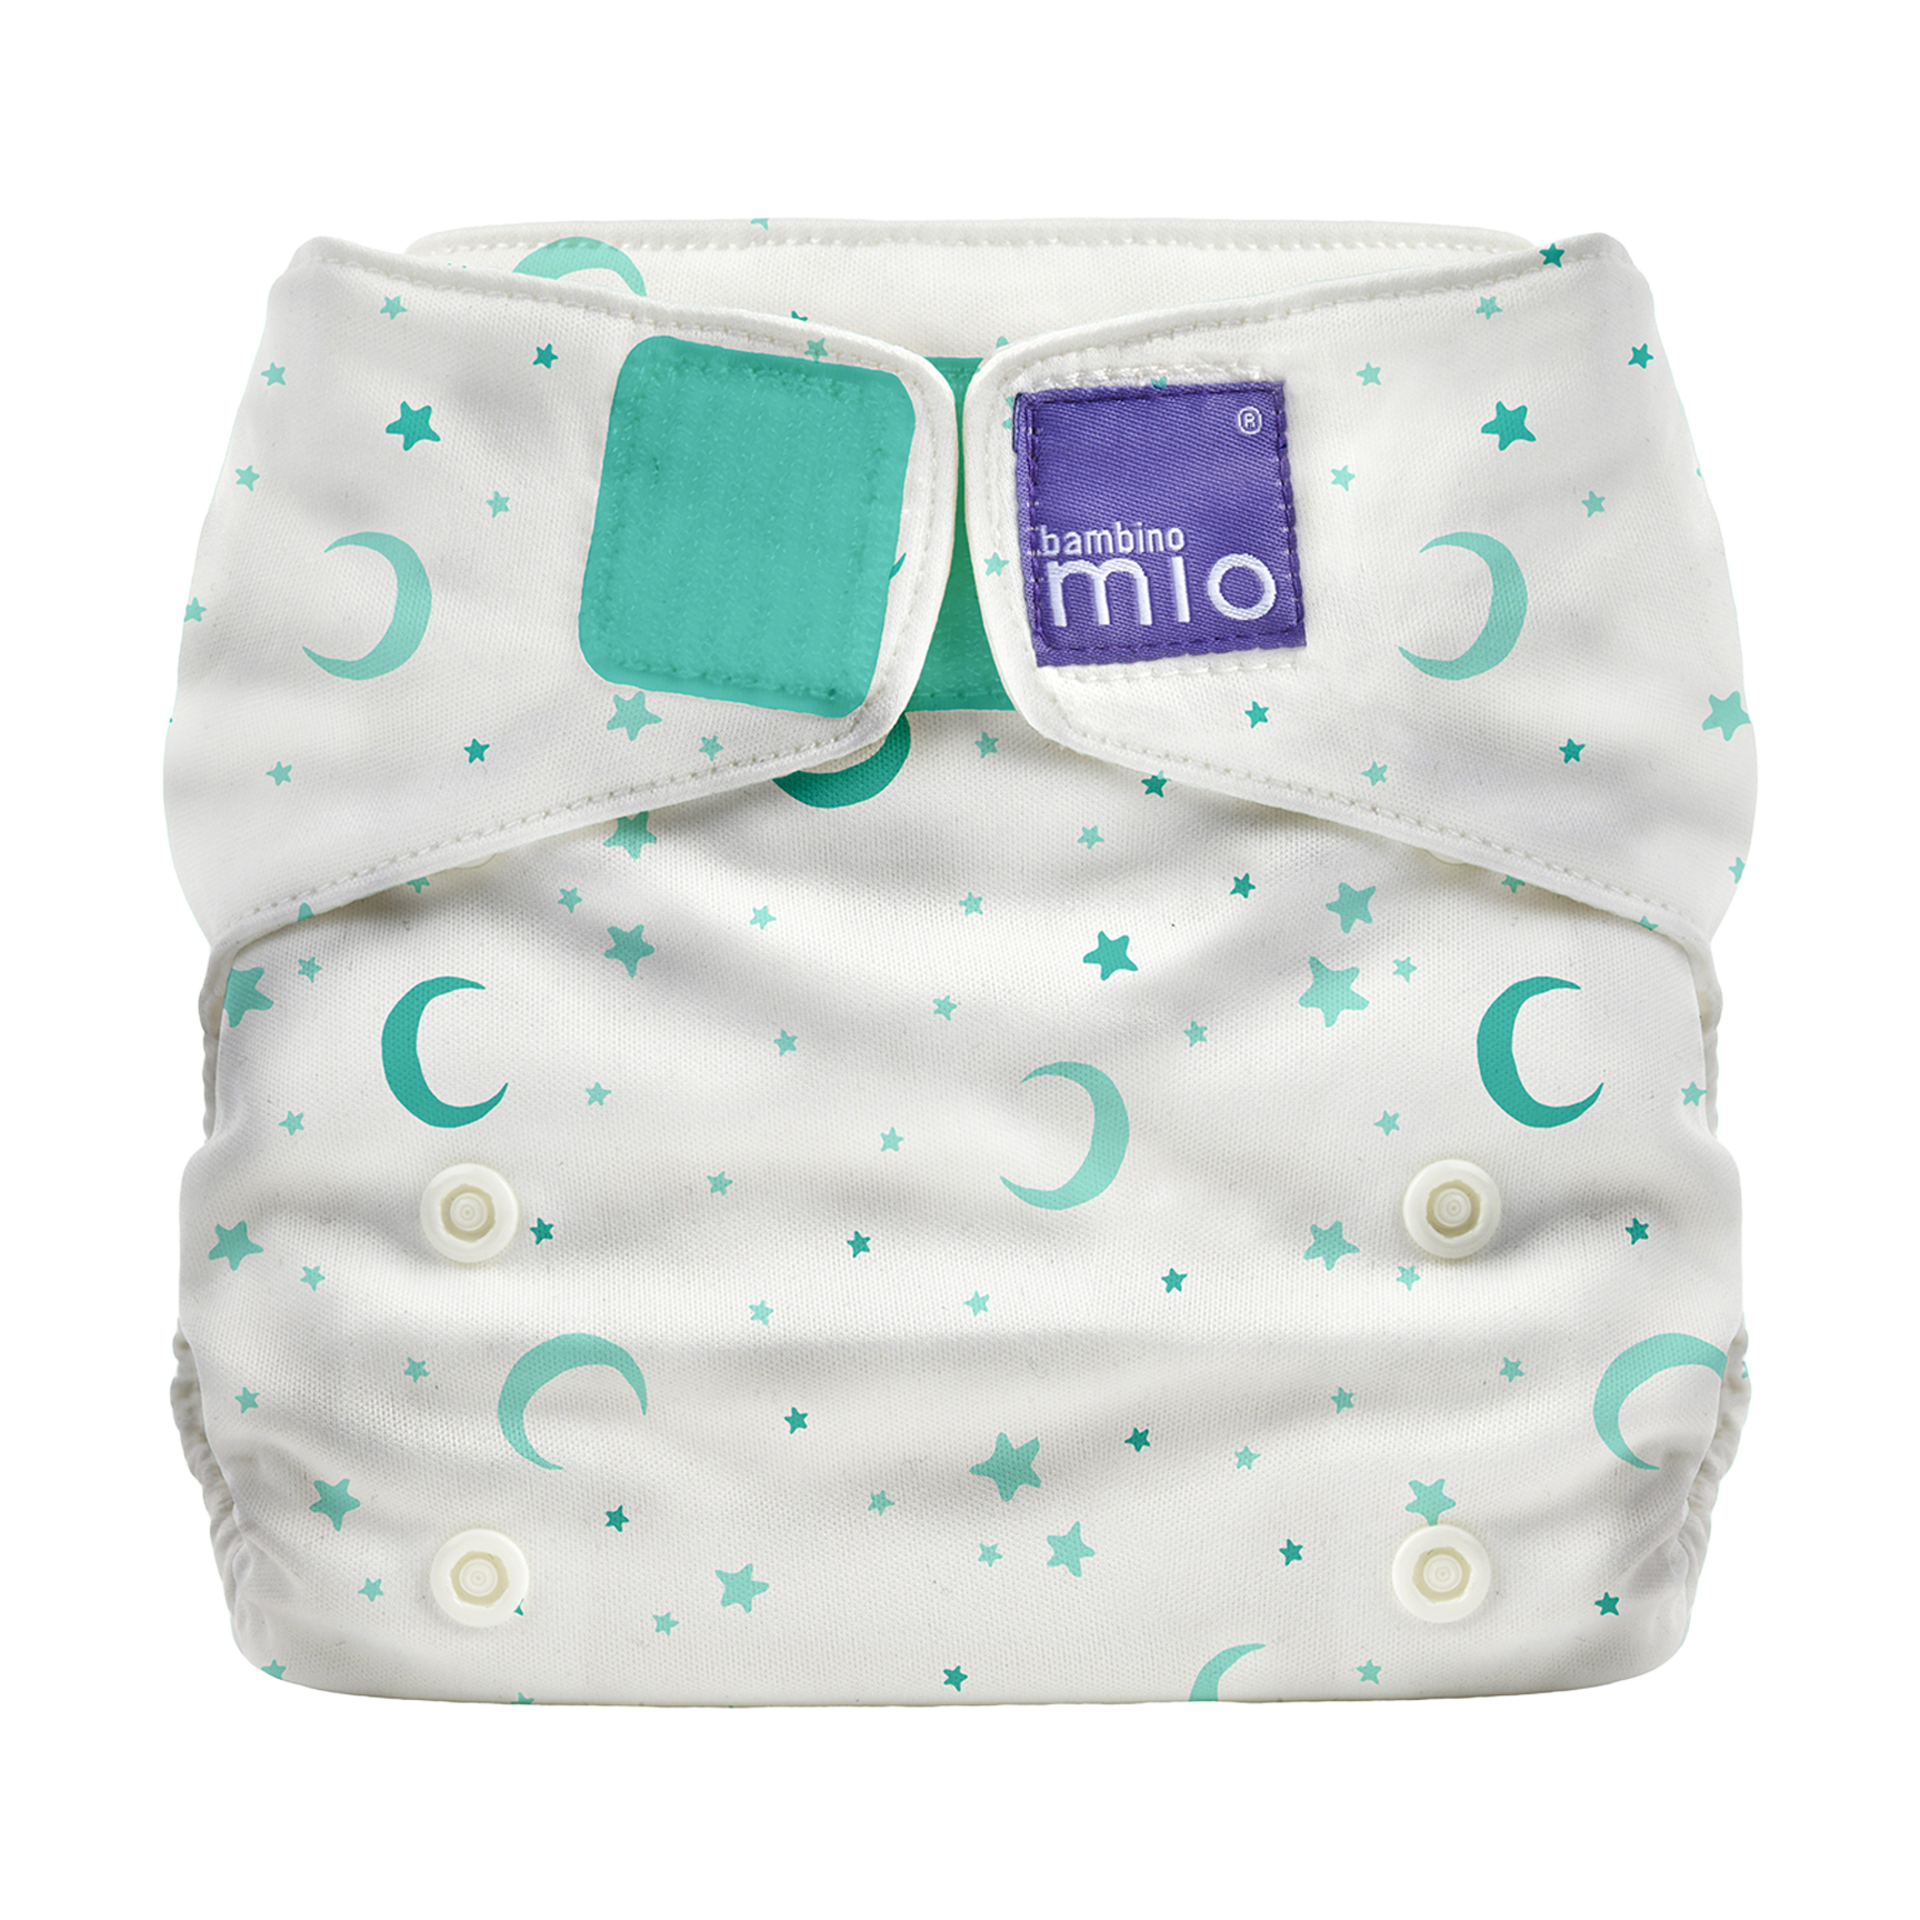 cloth diaper online shopping